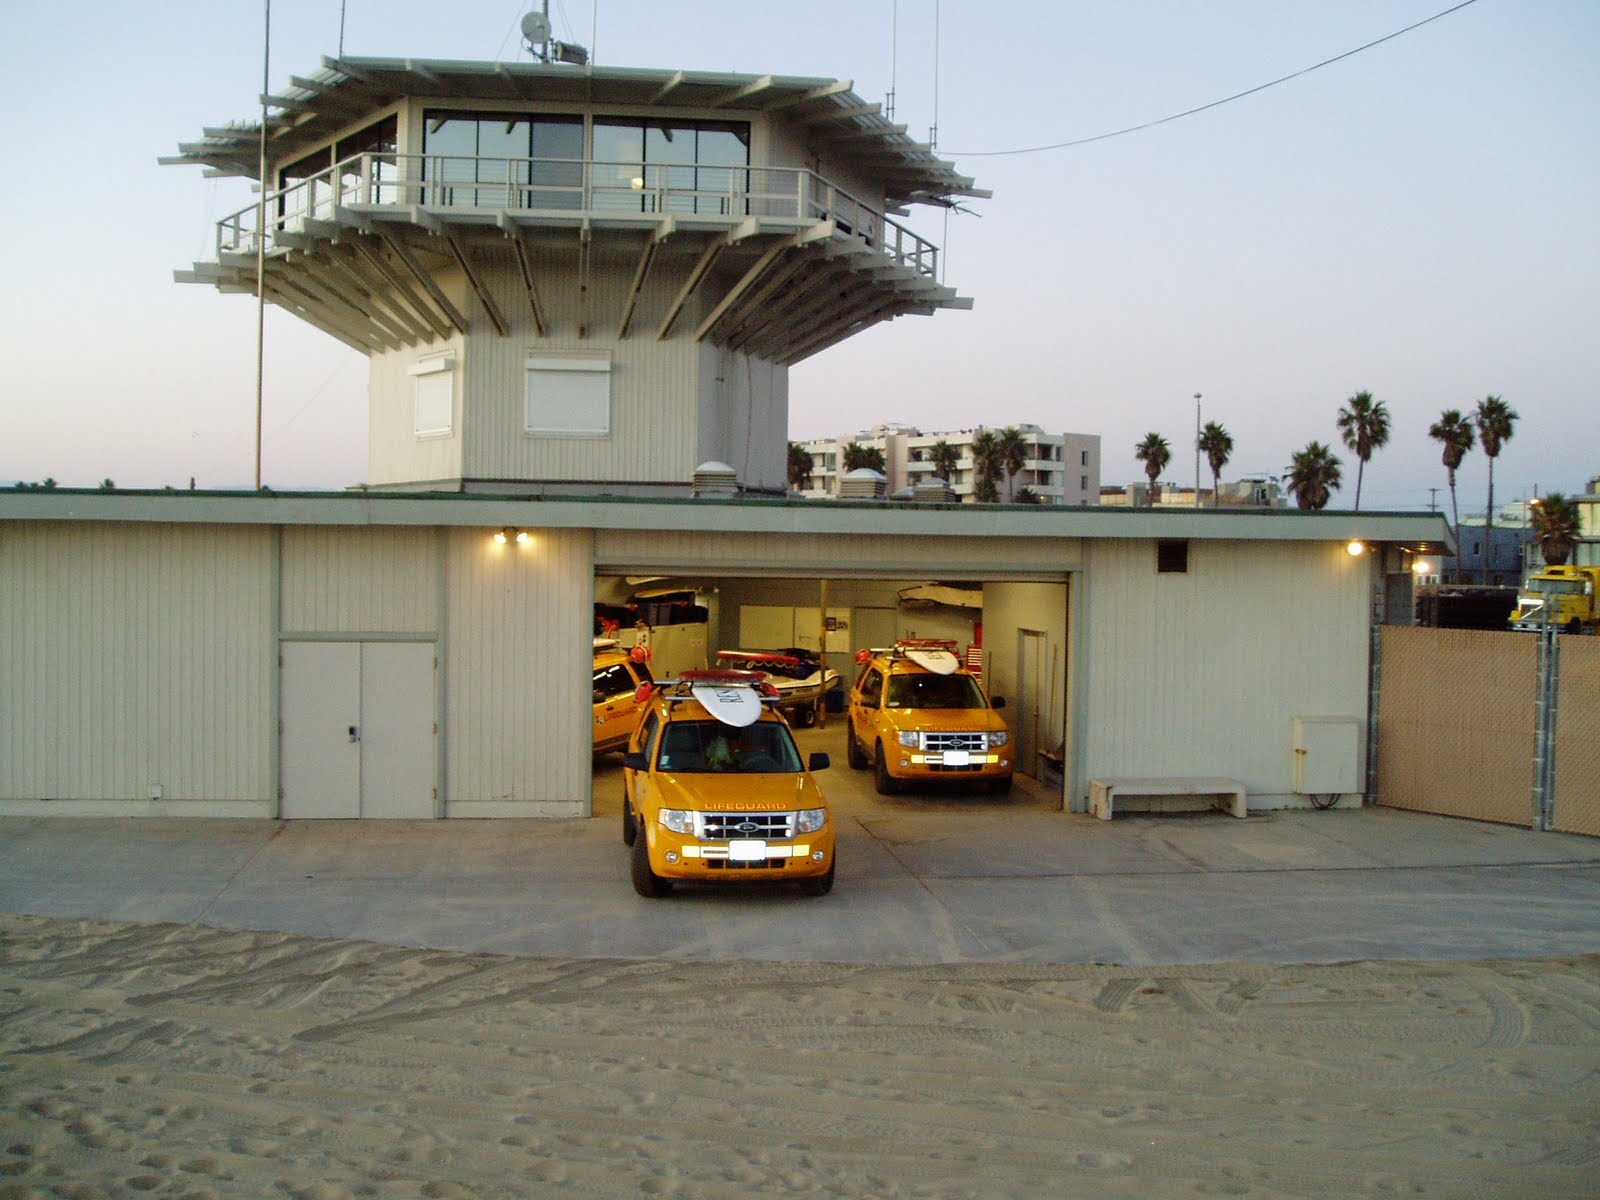 Venice Beach Lifeguard Tower1